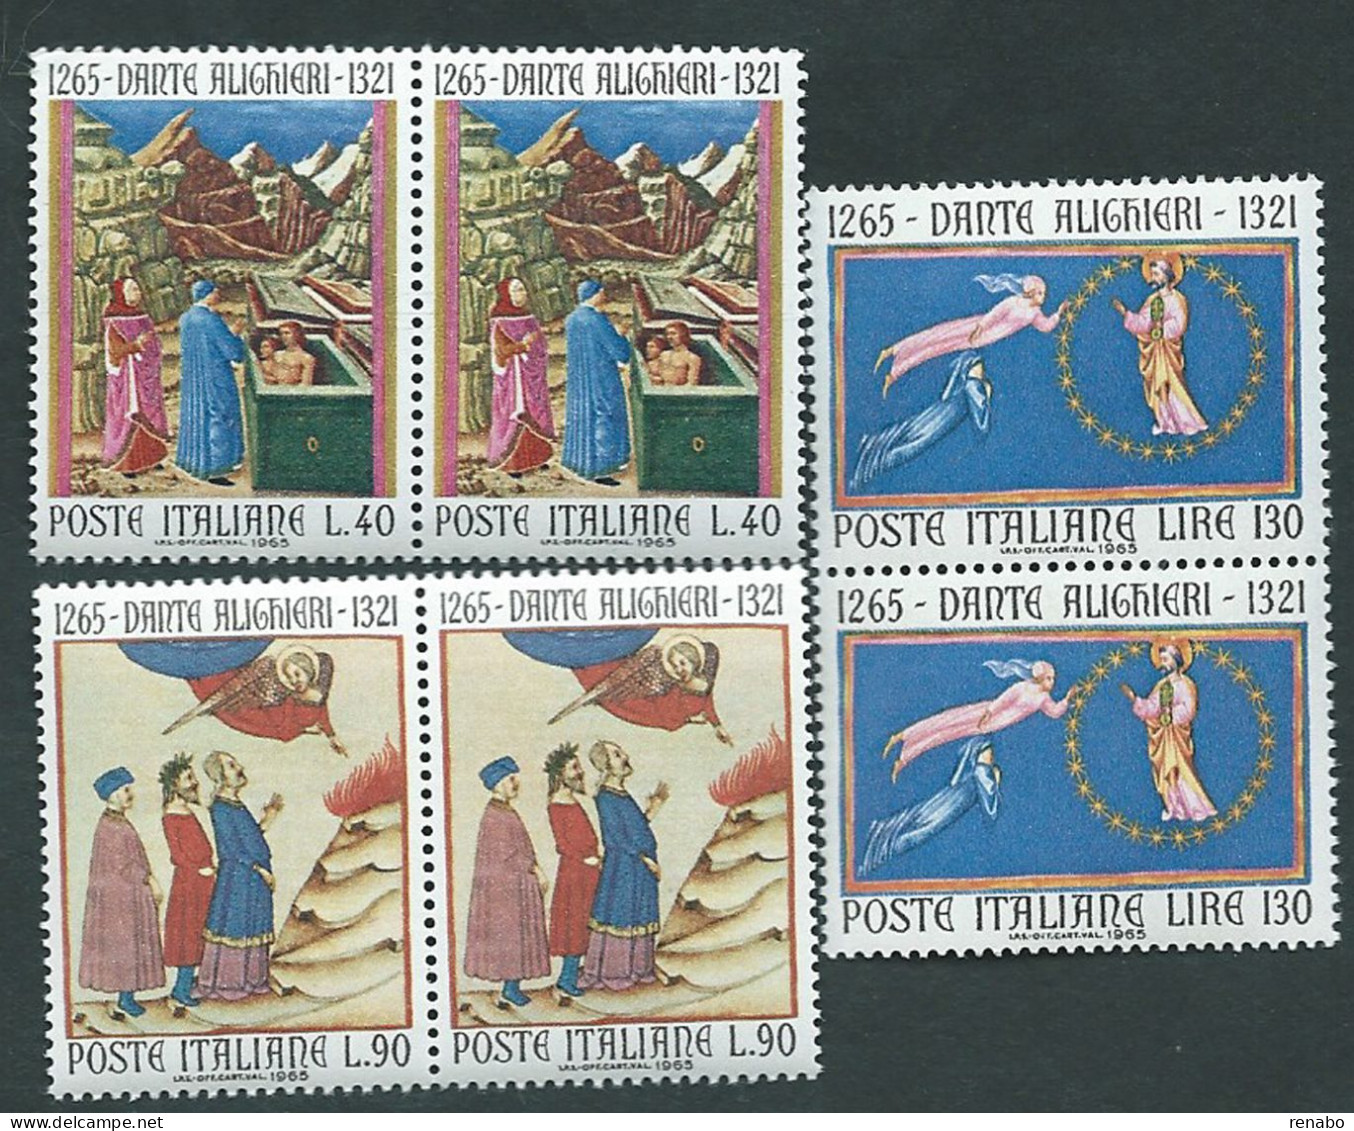 Italia, Italy, Italien, Italie 1965;Dante Alighieri: Miniature,miniating, Figure Della Divina Commedia, “Divine Comedy”. - Religious